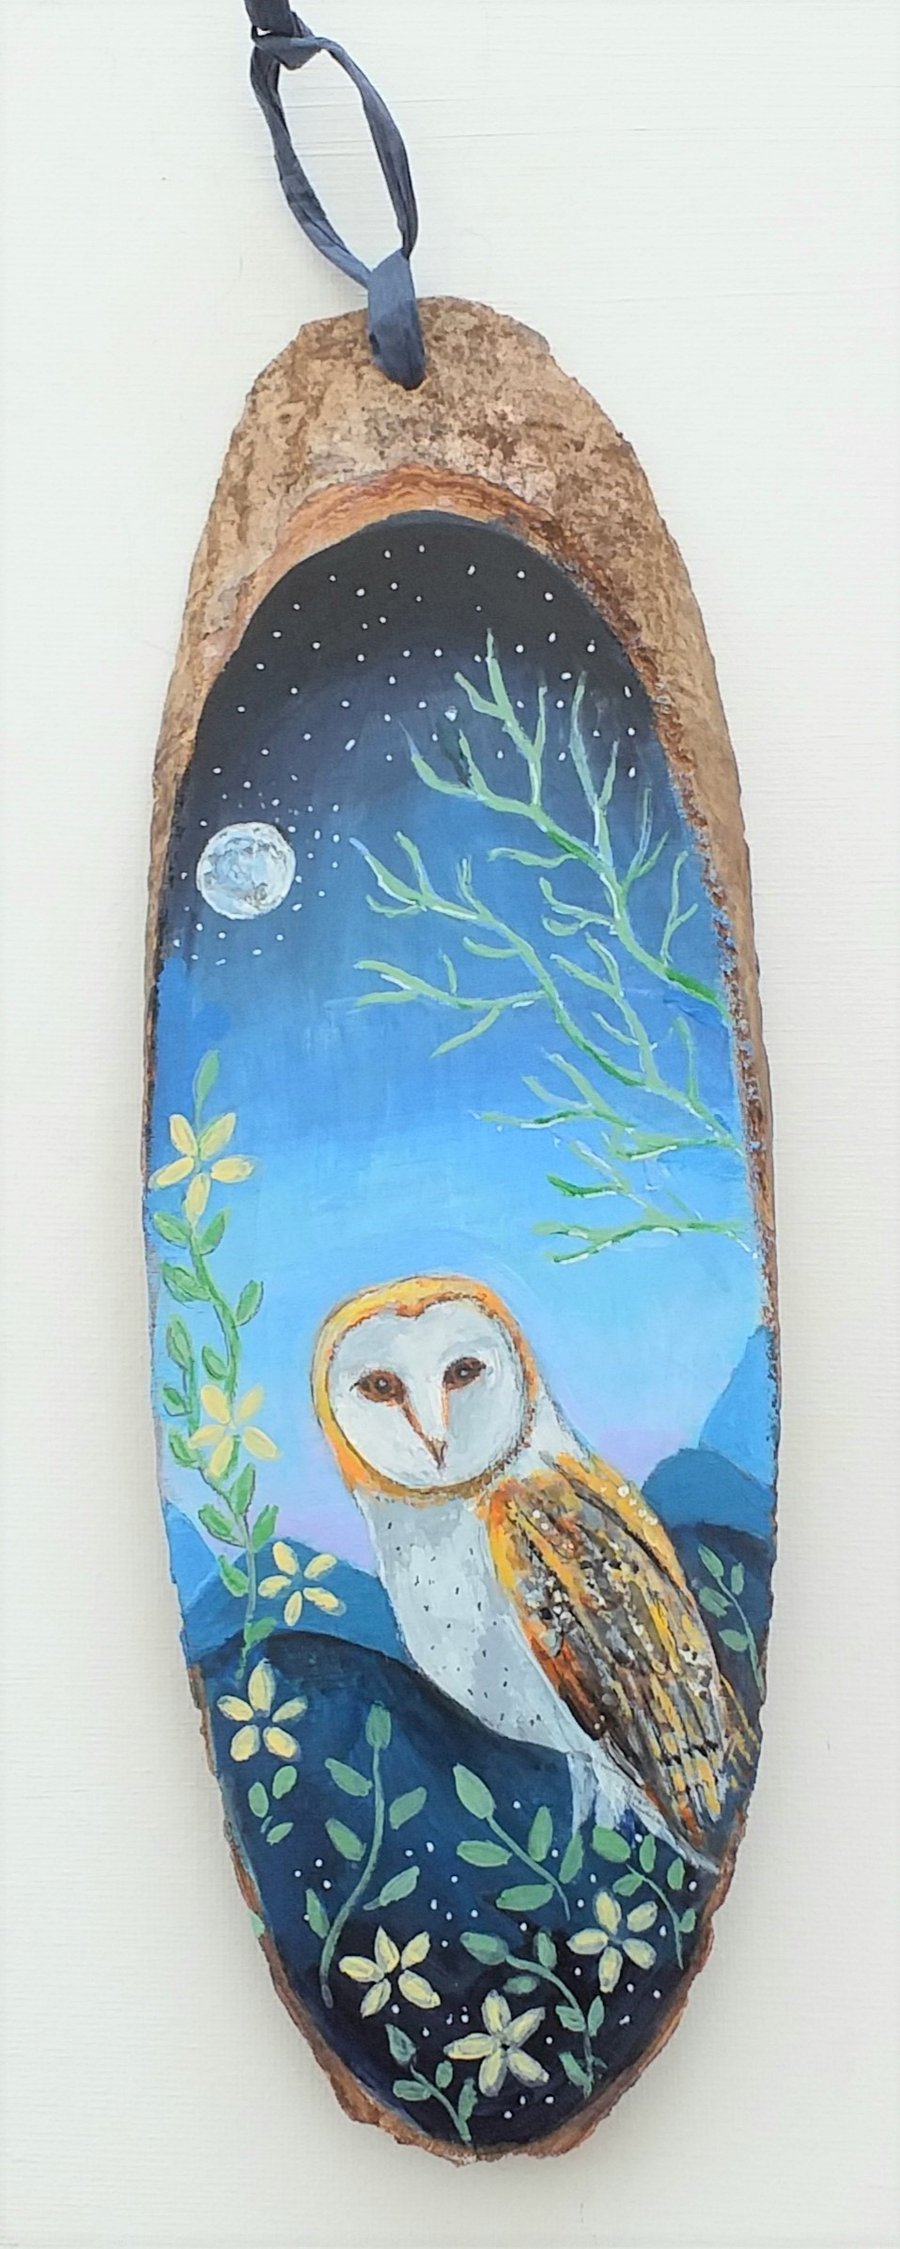 Owl in moonlight on wood slice